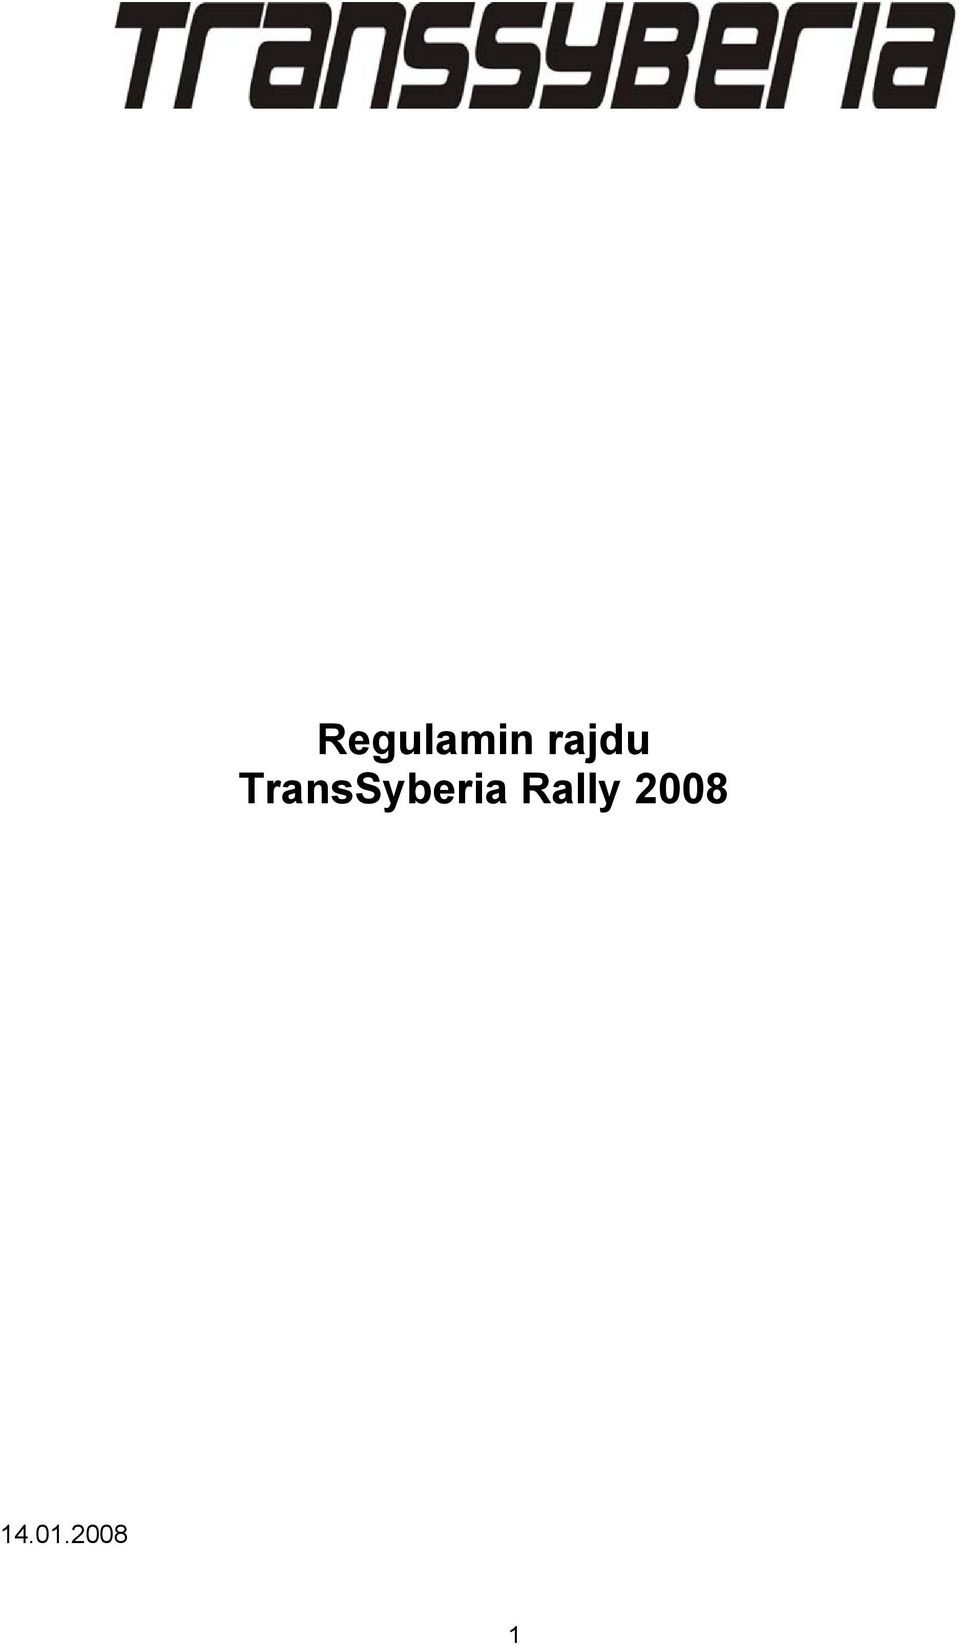 TransSyberia